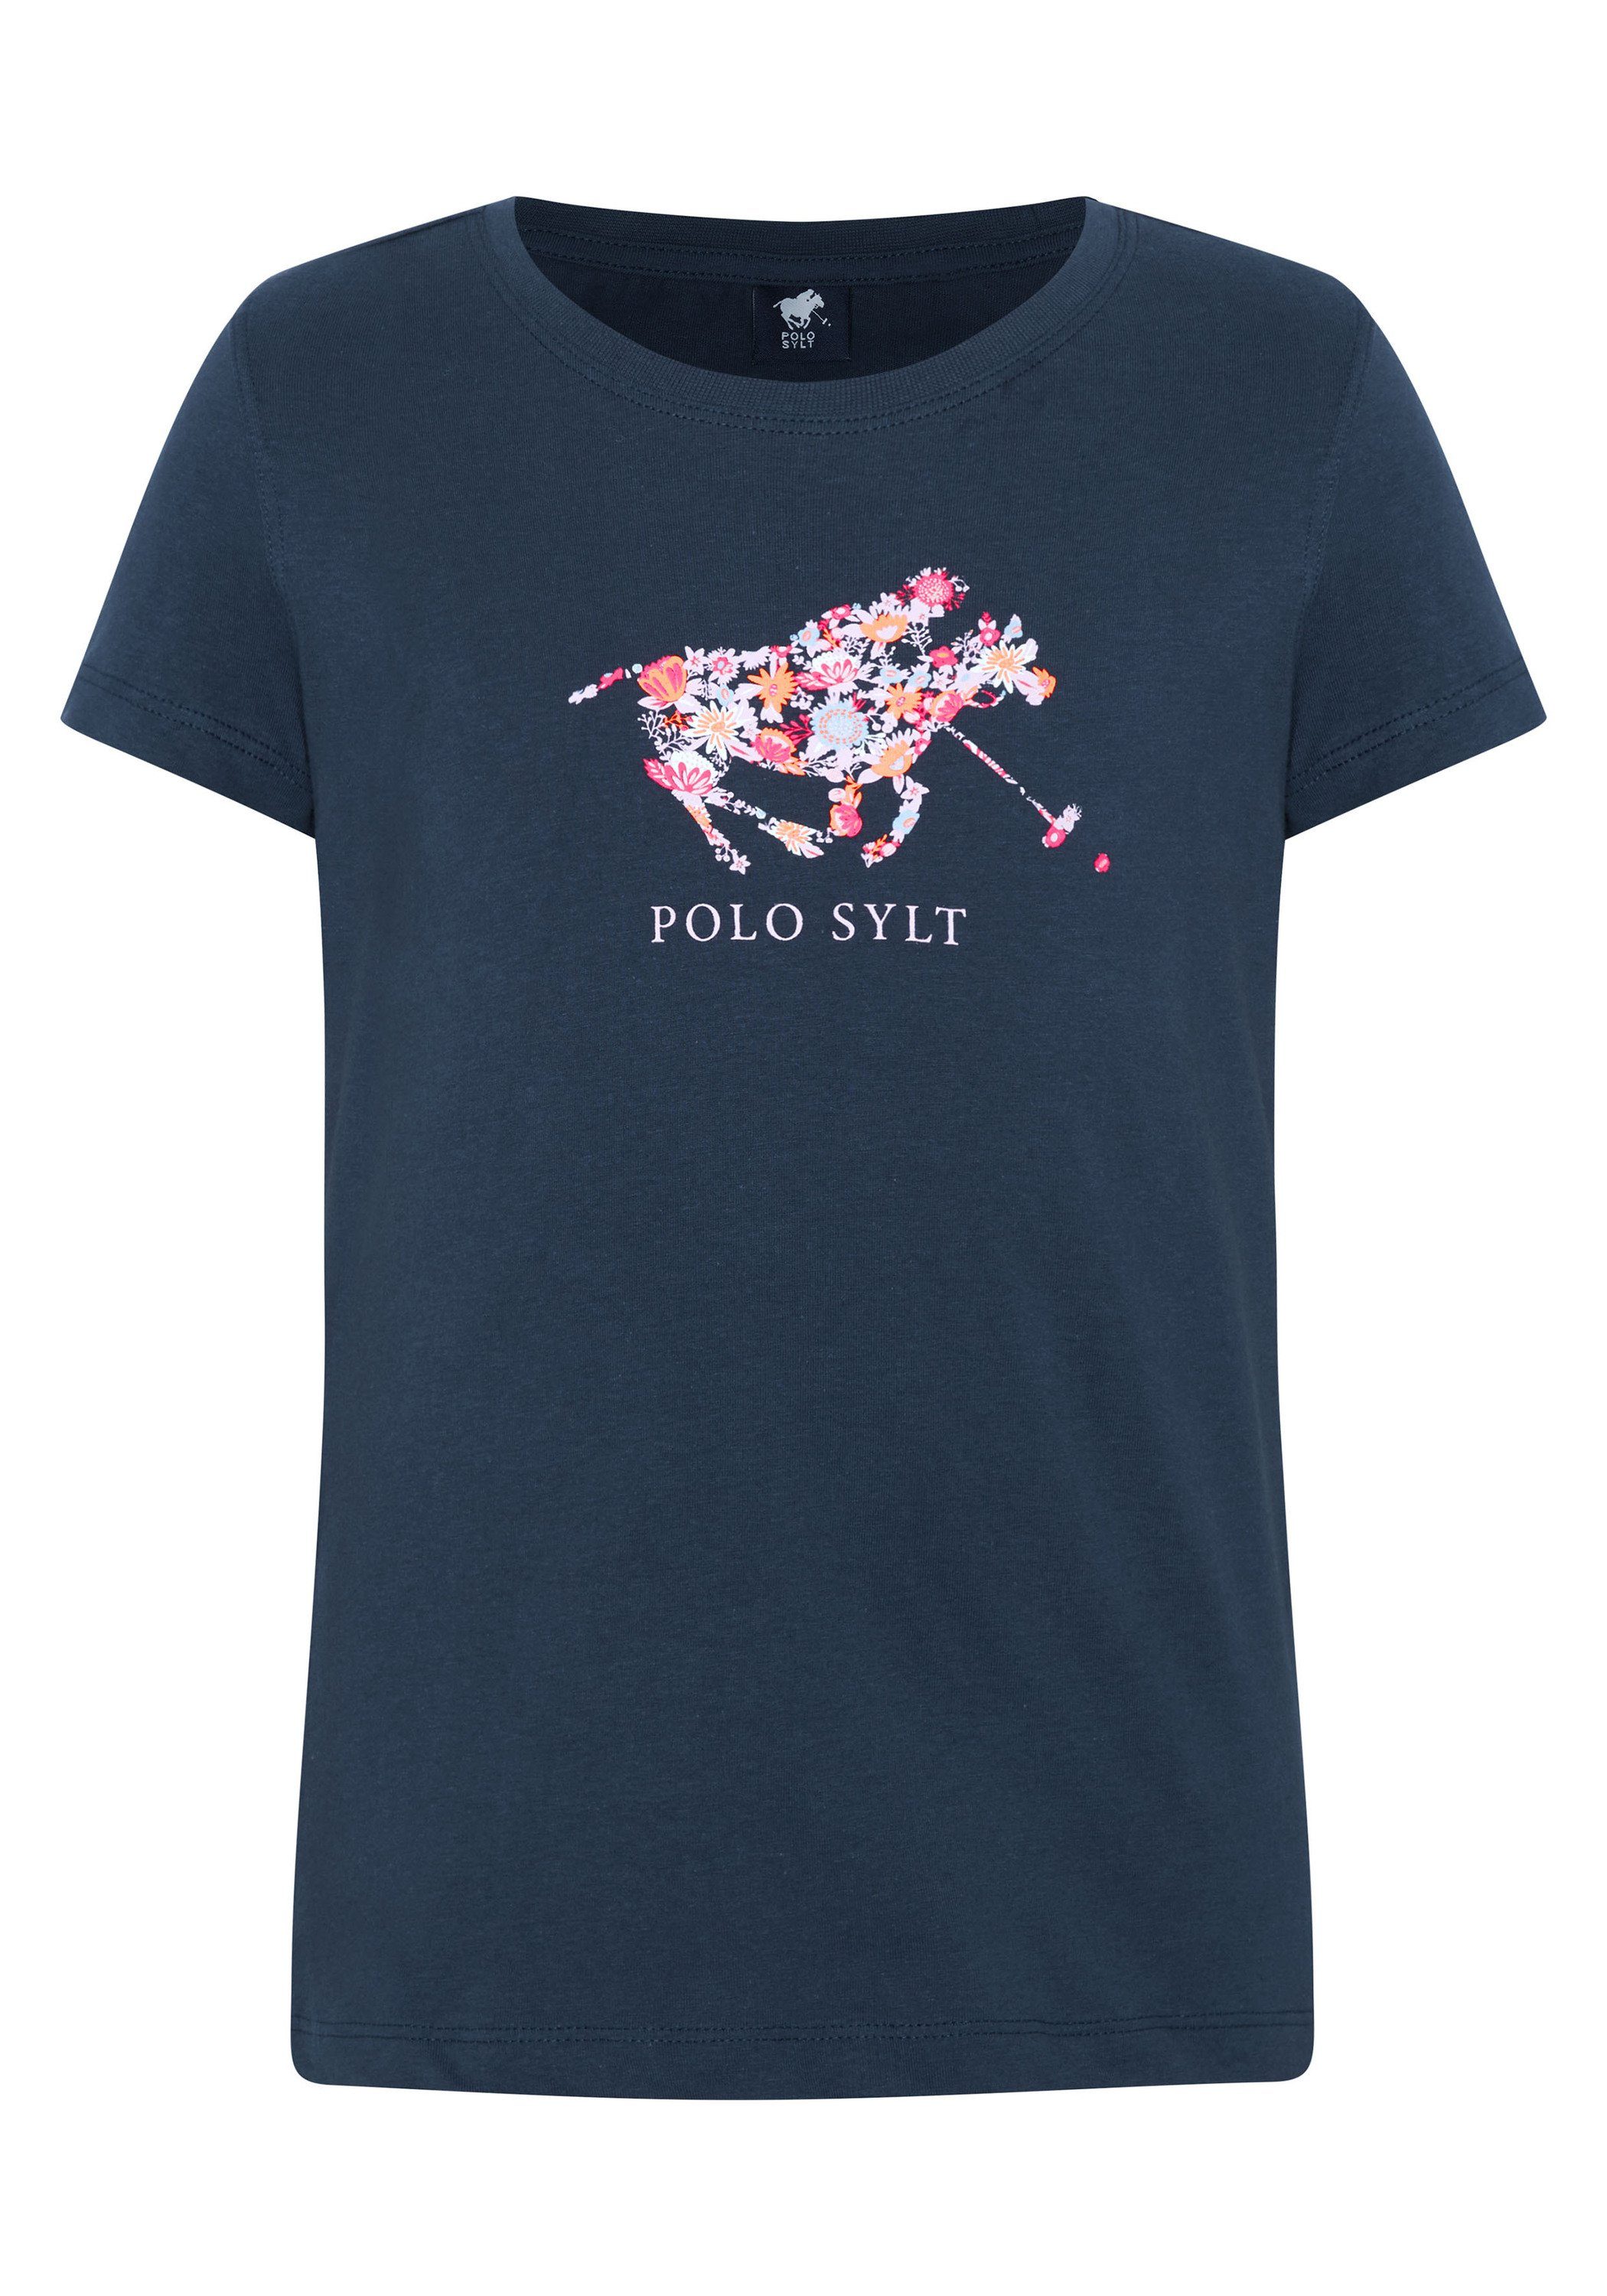 Polo Sylt Print-Shirt aus Total Jersey Eclipse 19-4010 weichem